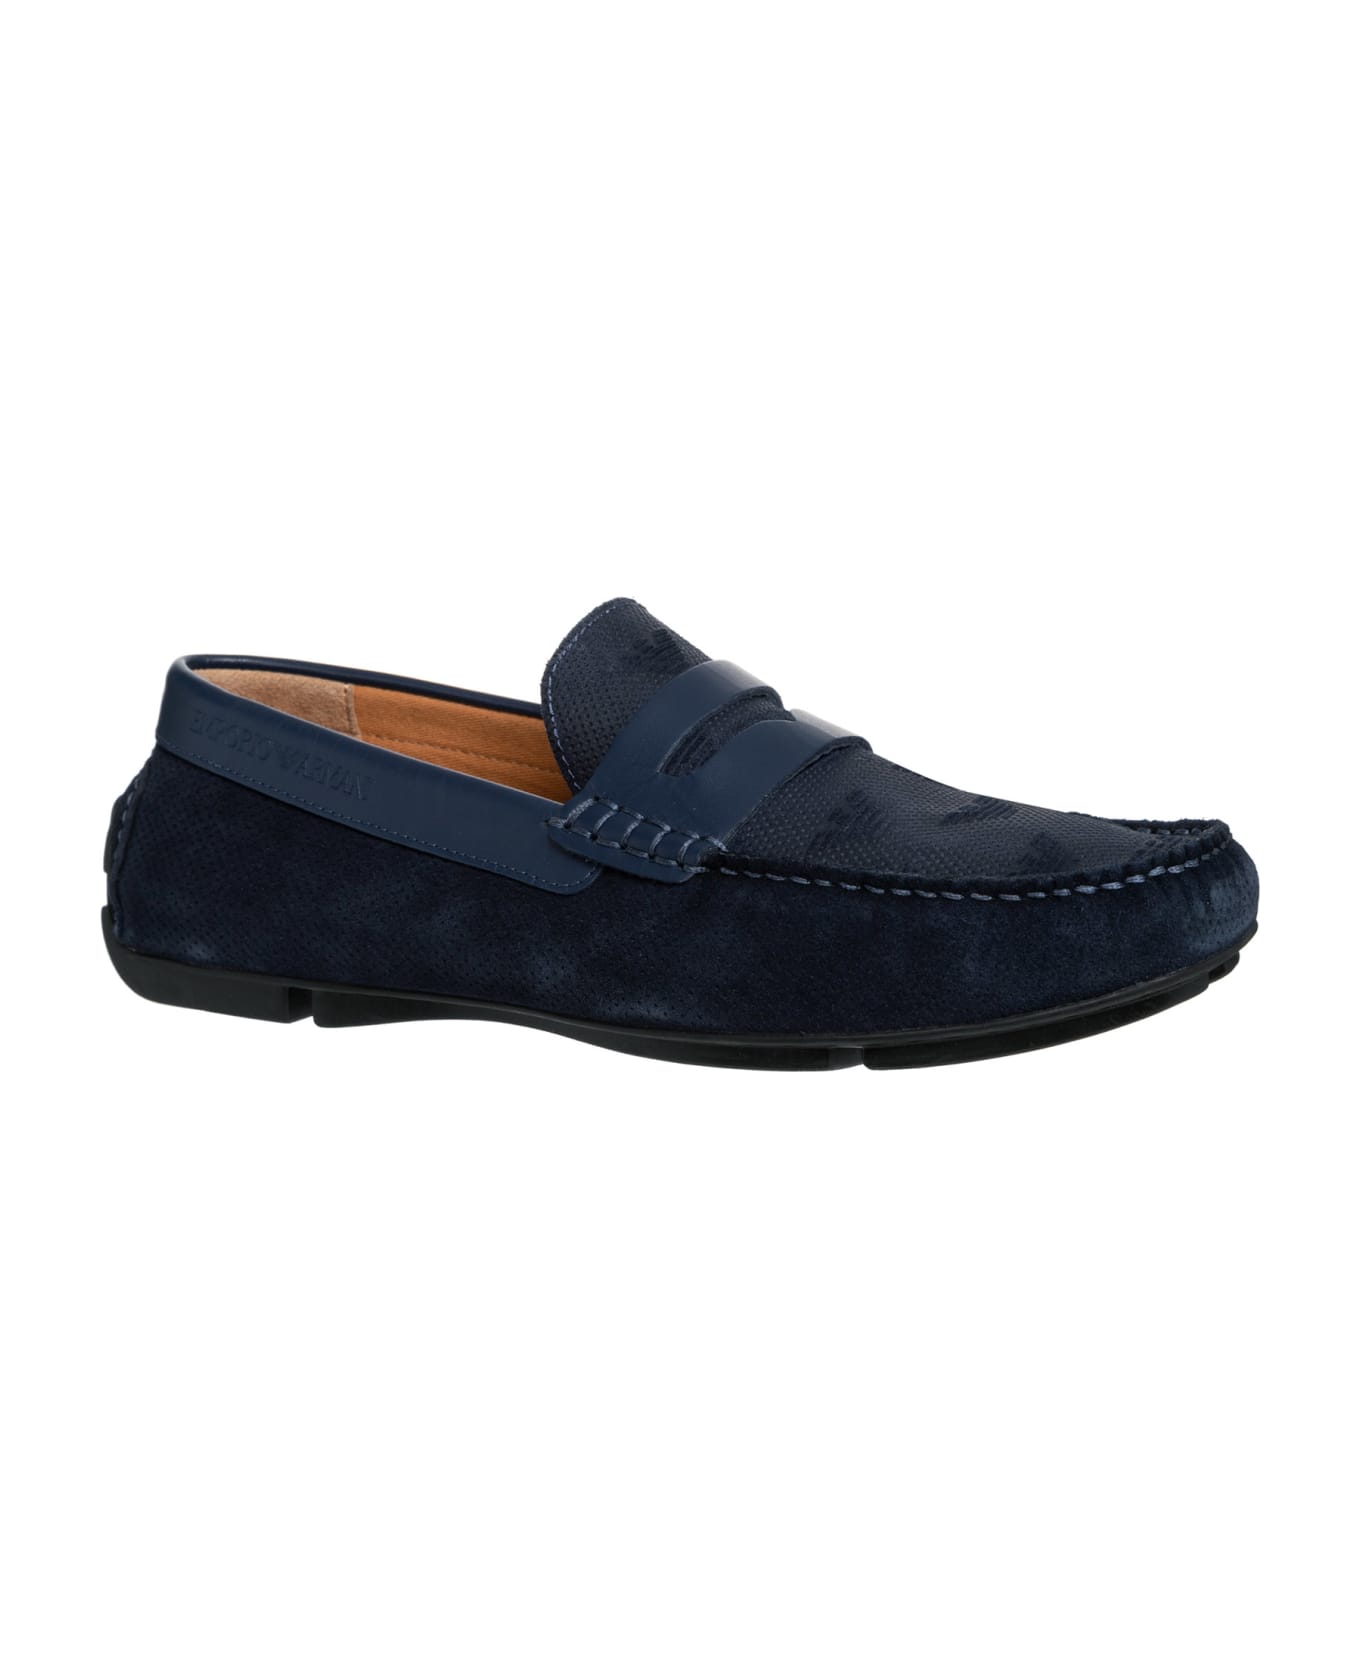 Emporio Armani Leather Loafers - Blu